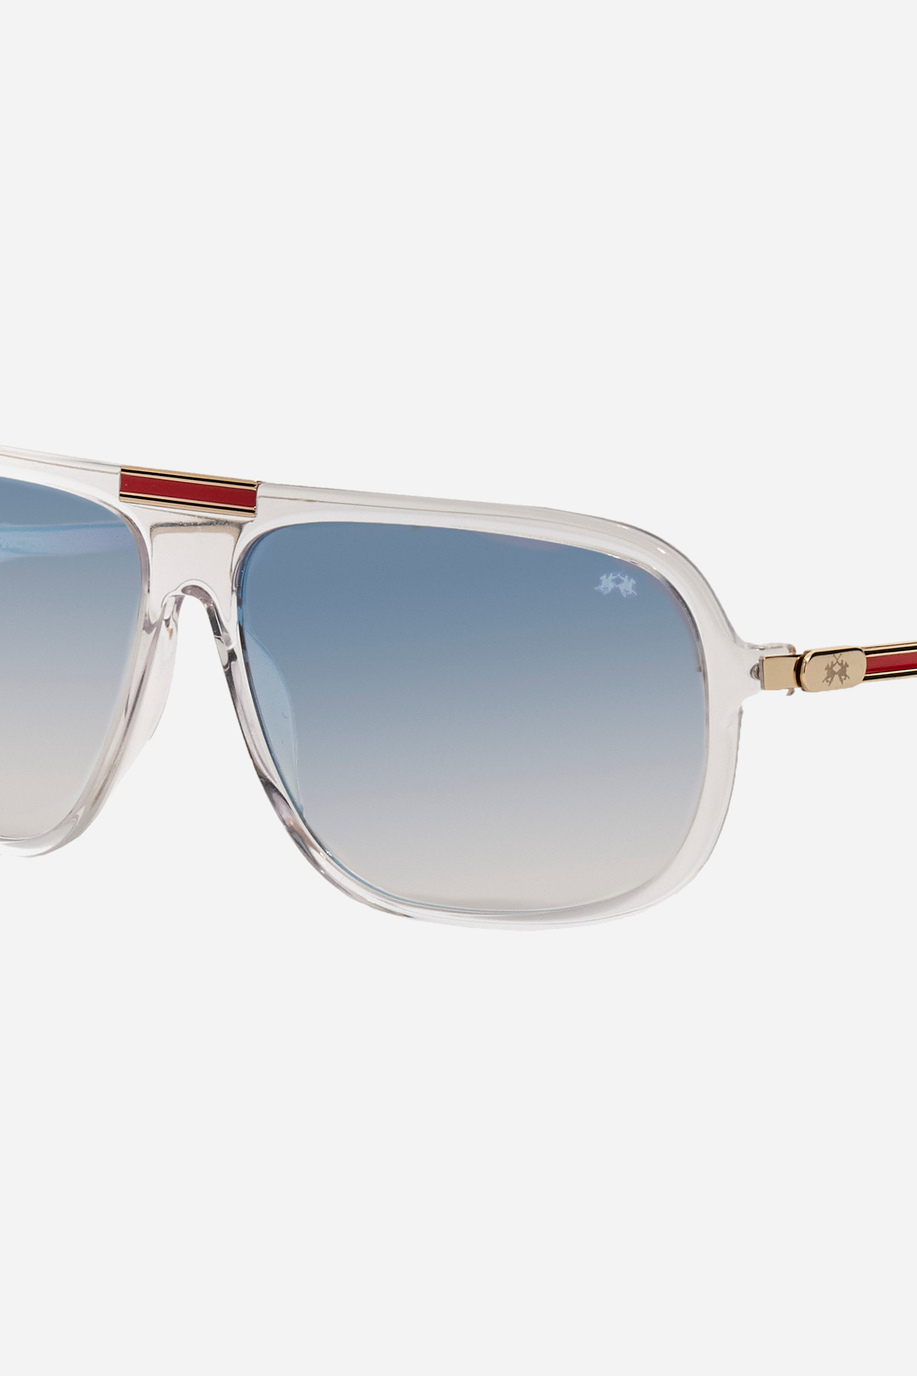 Sonnenbrille aus Metall - Accessoires für ihn | La Martina - Official Online Shop